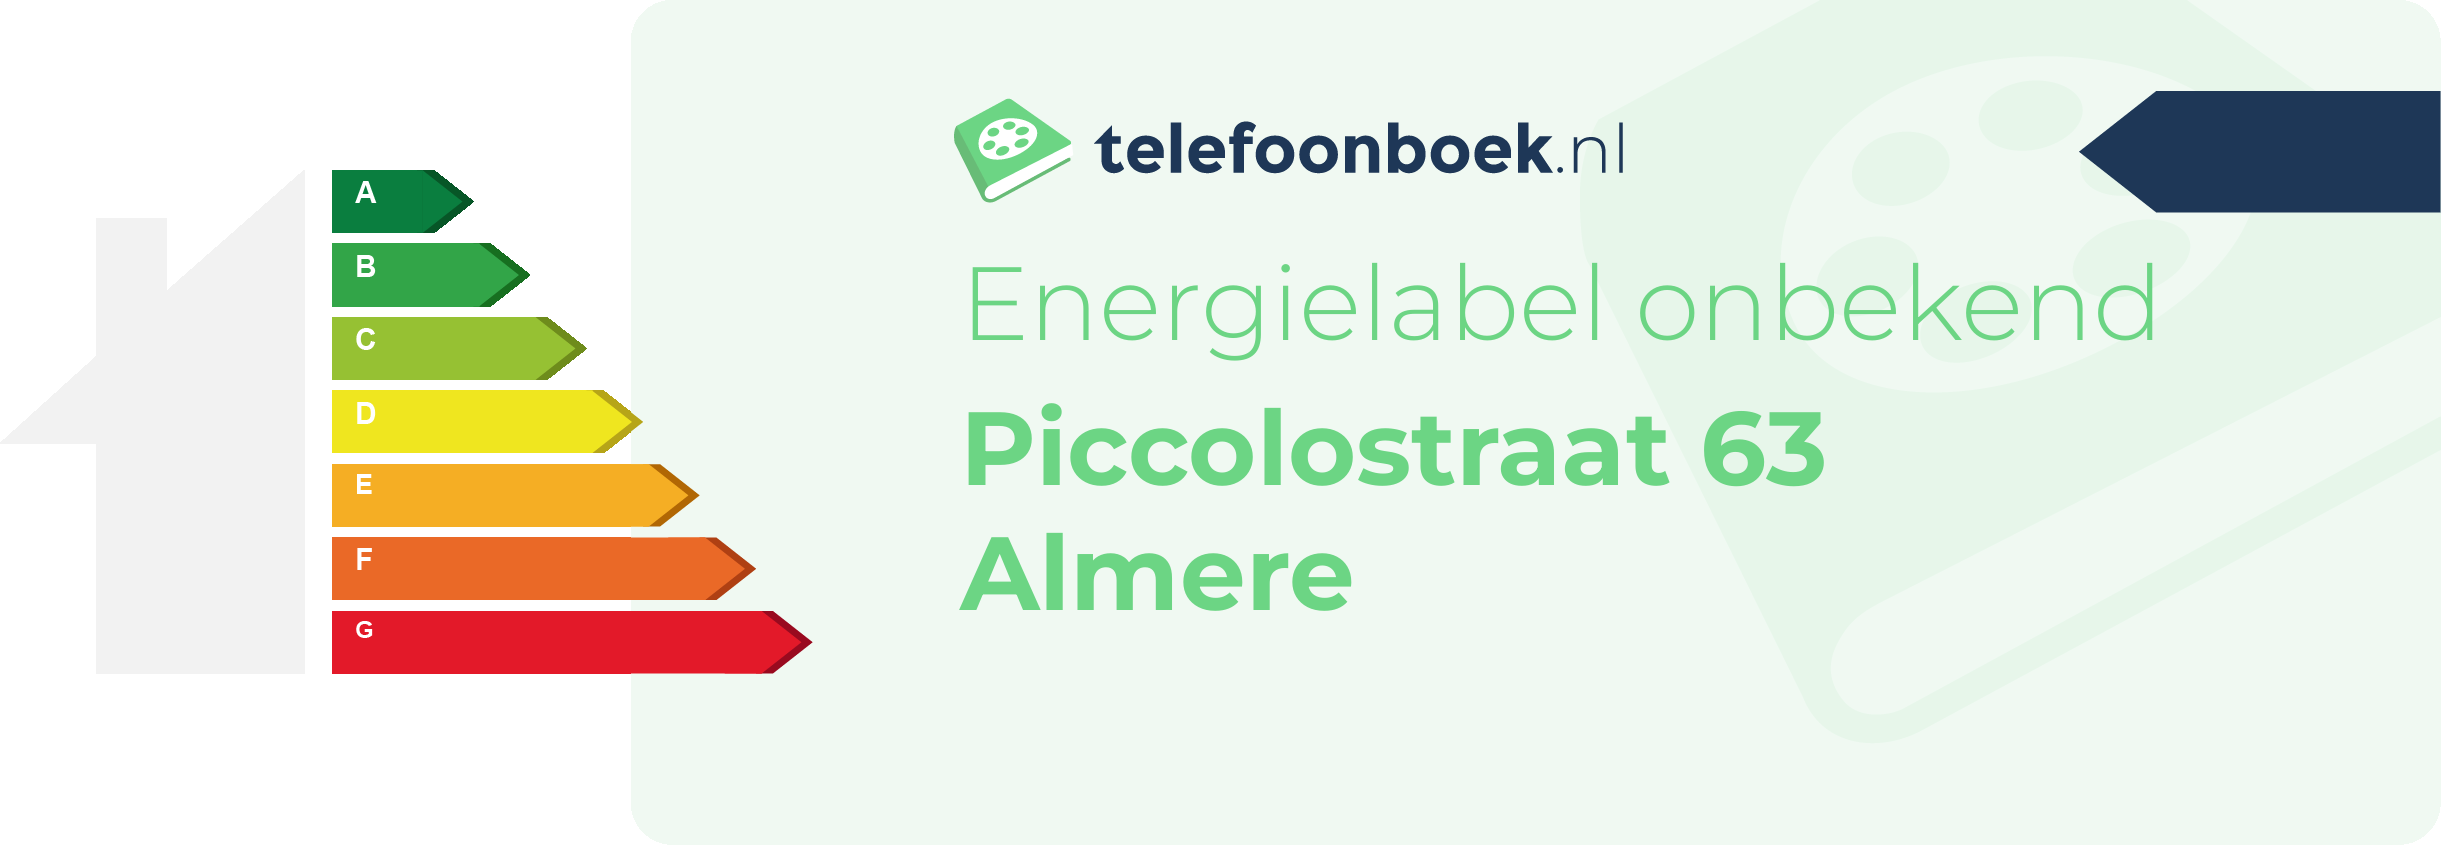 Energielabel Piccolostraat 63 Almere